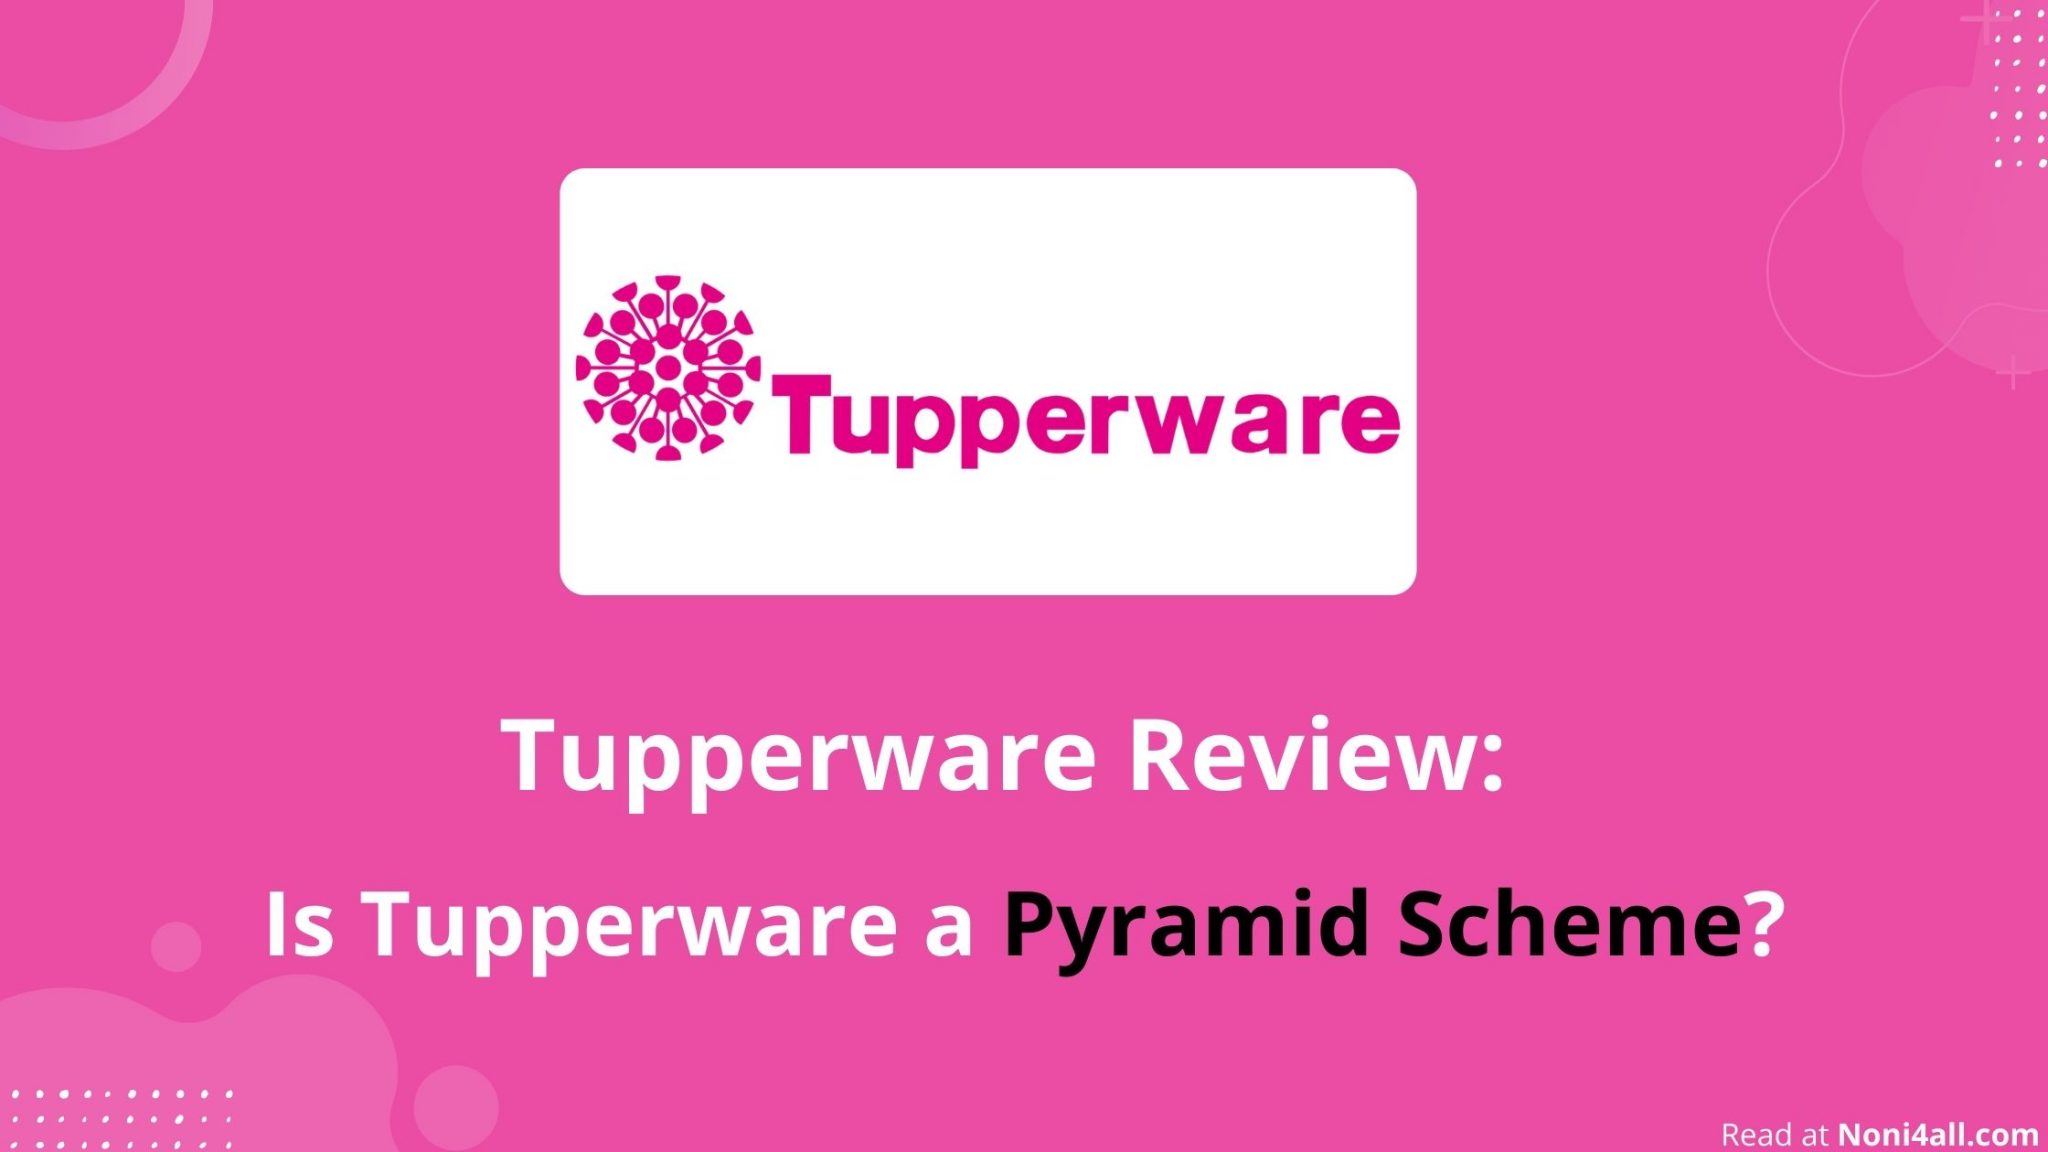 tupperware business plan pdf